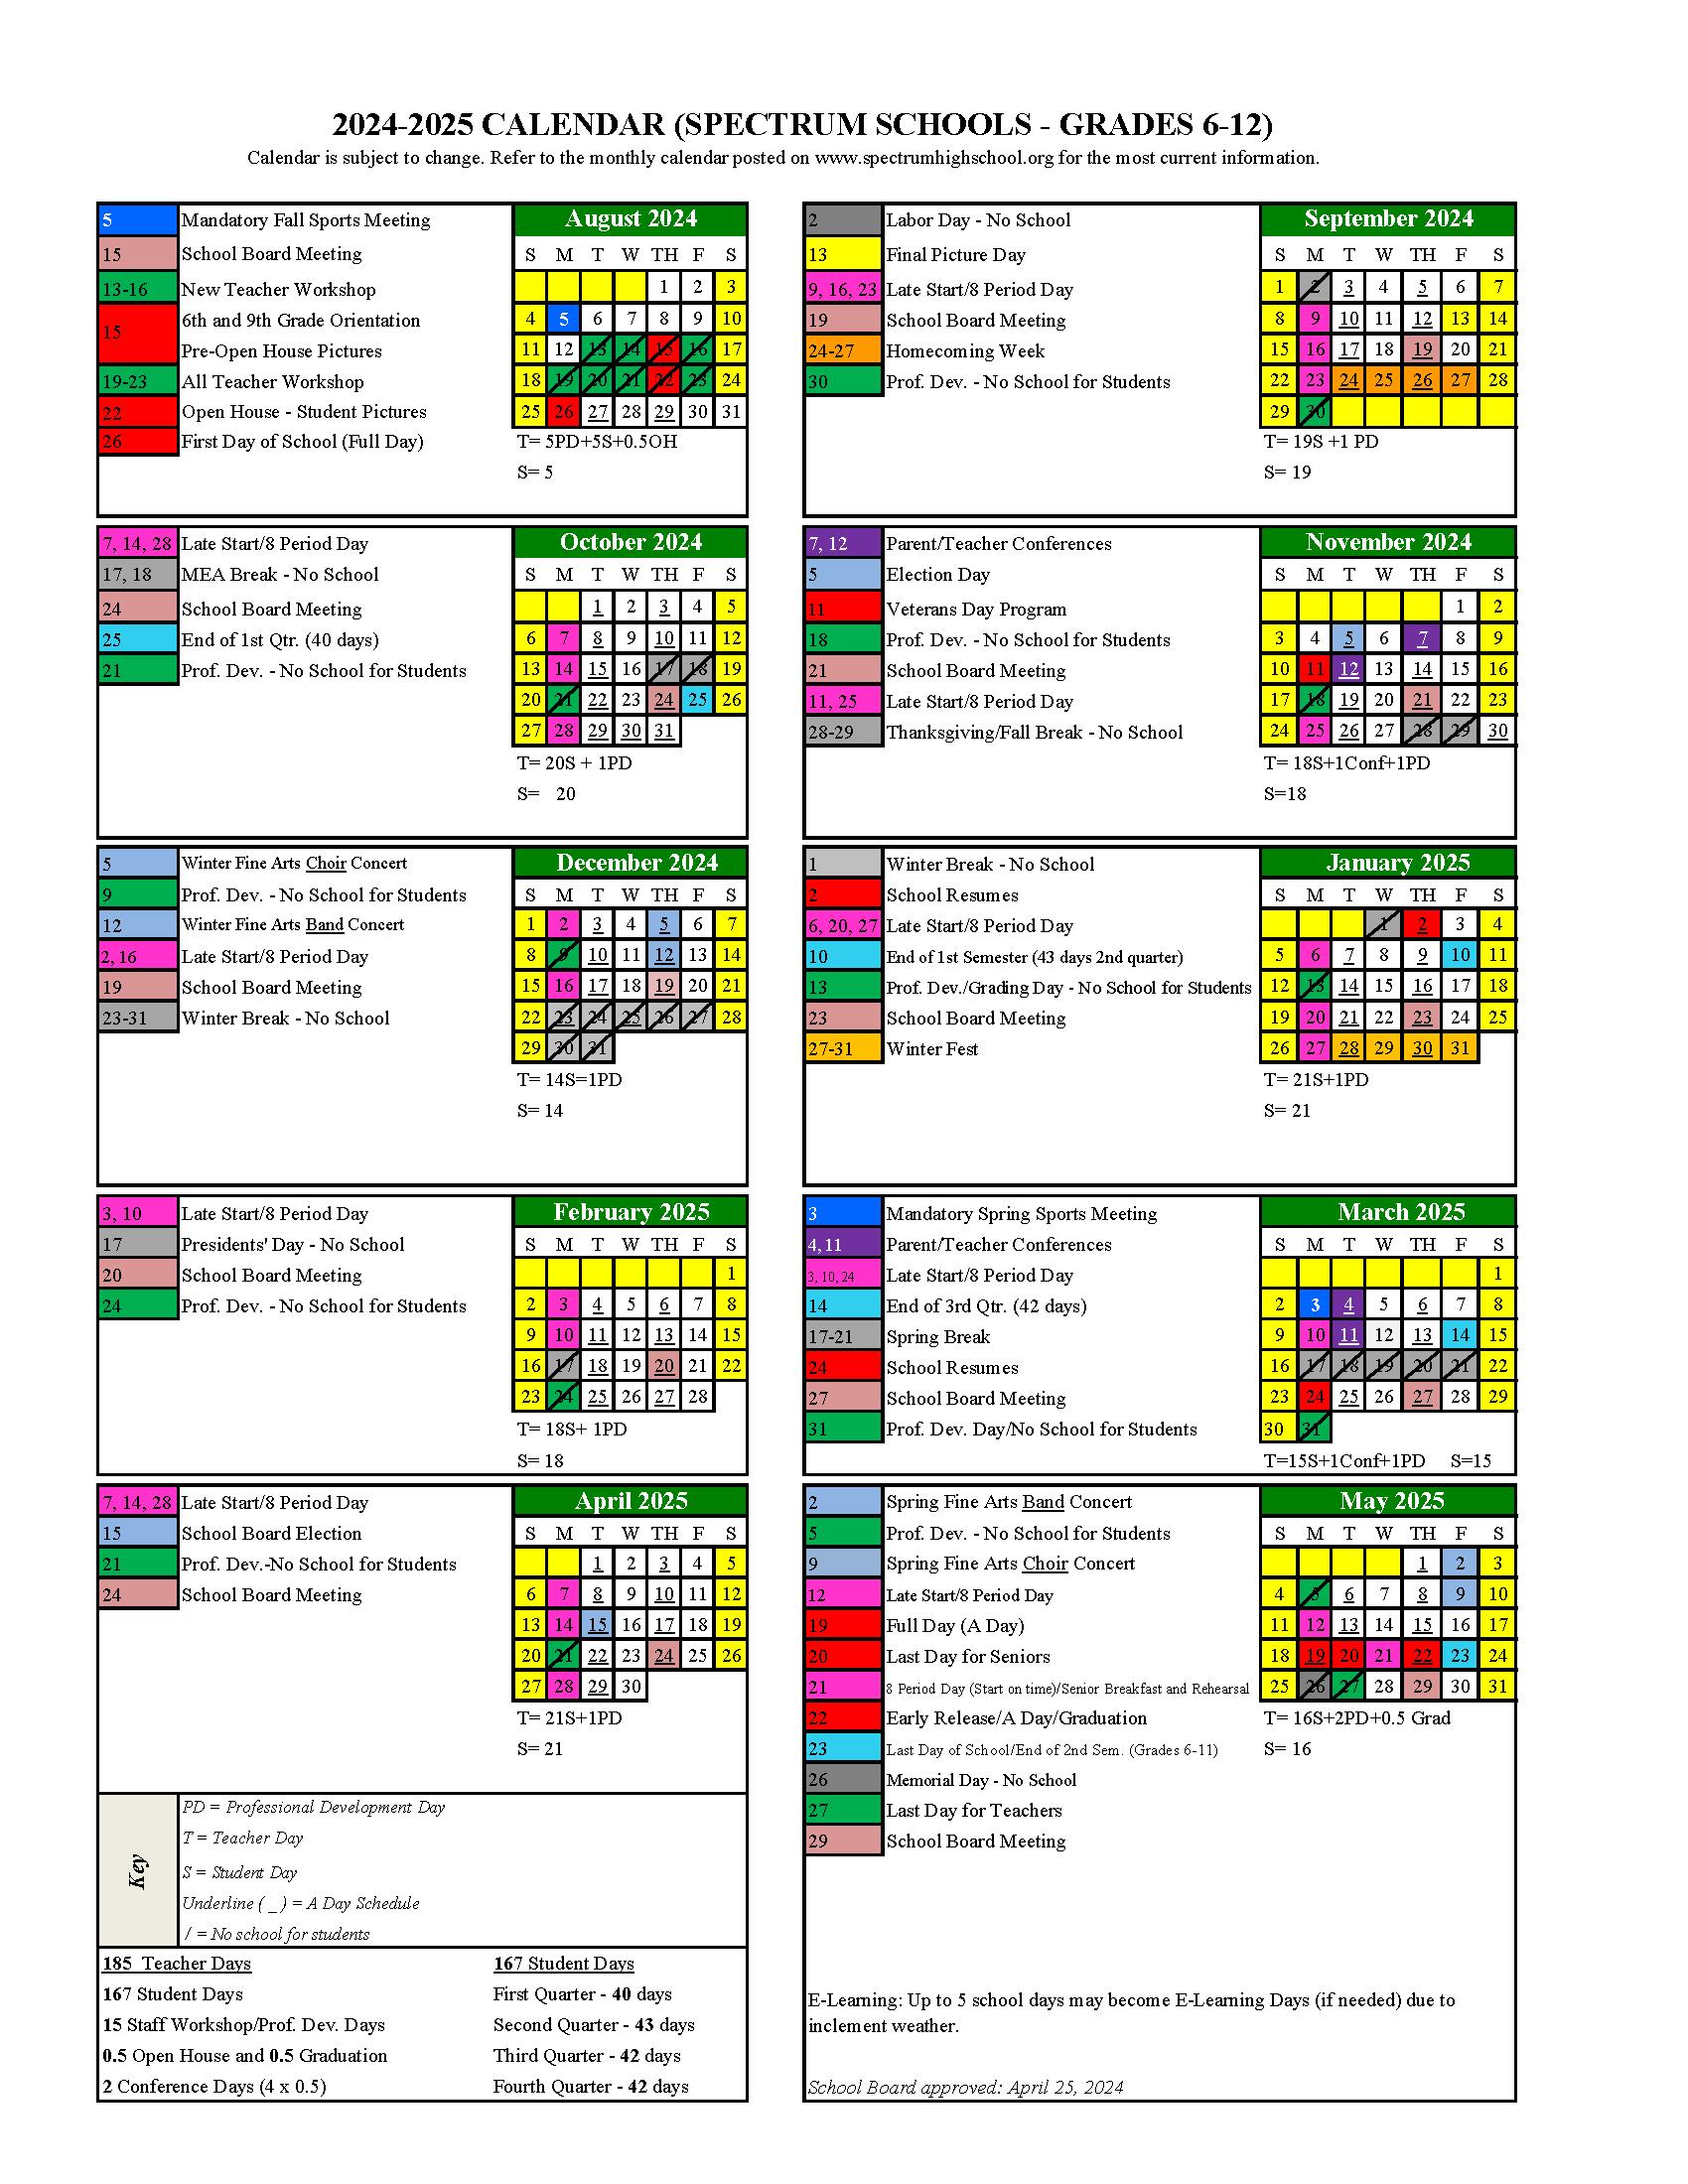 Spectrum Calendar